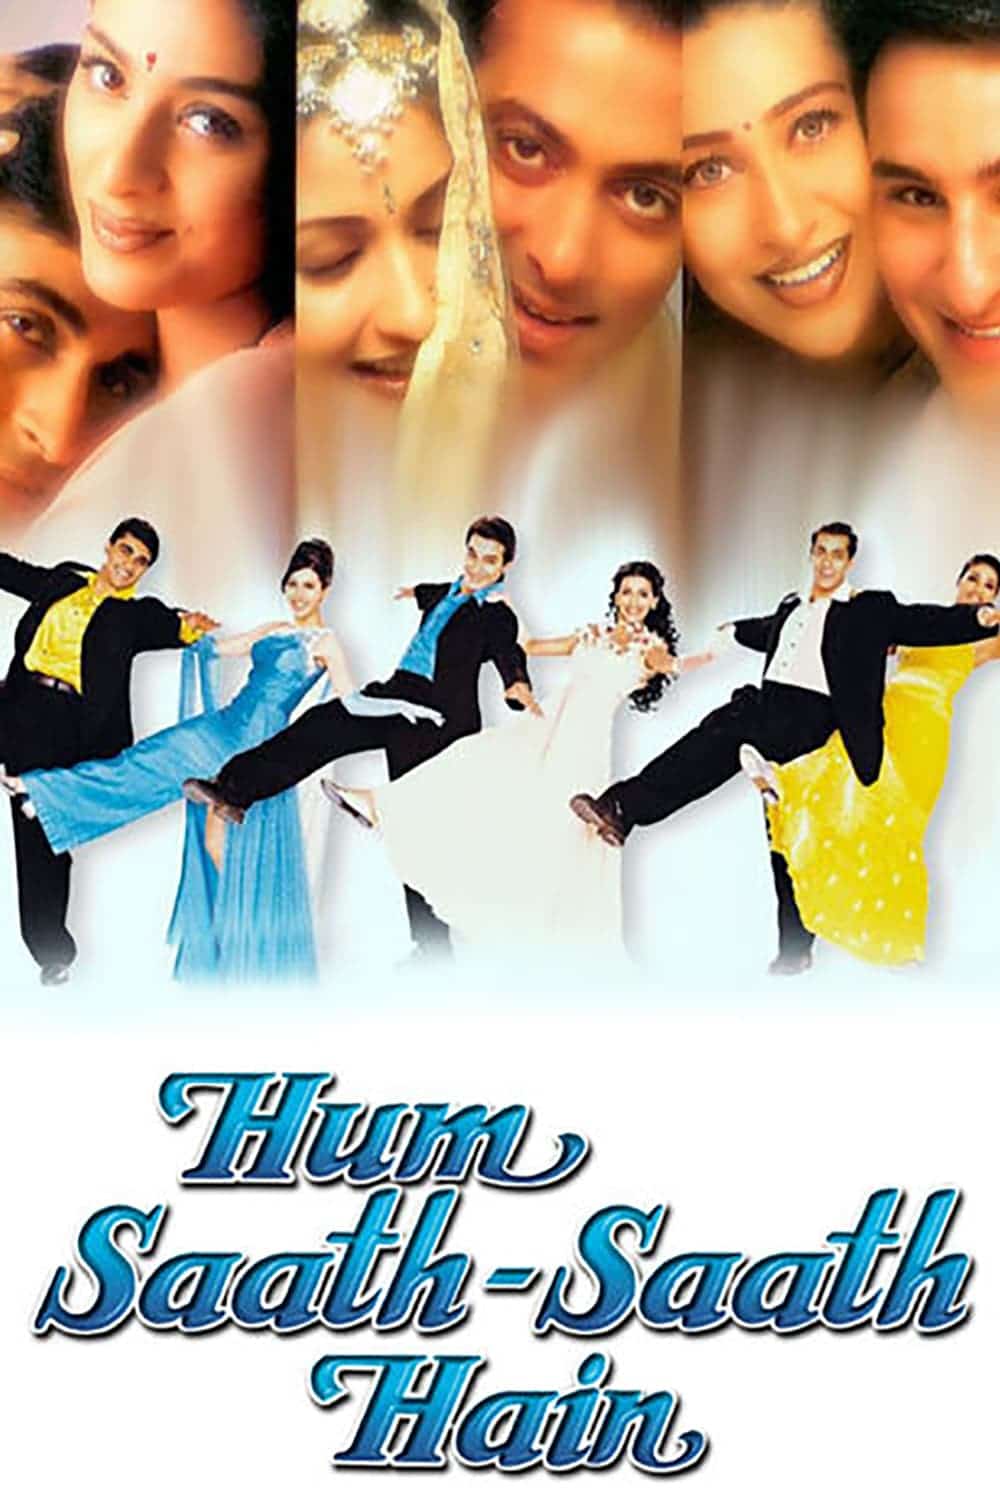 Poster for the movie "Hum Saath Saath Hain"